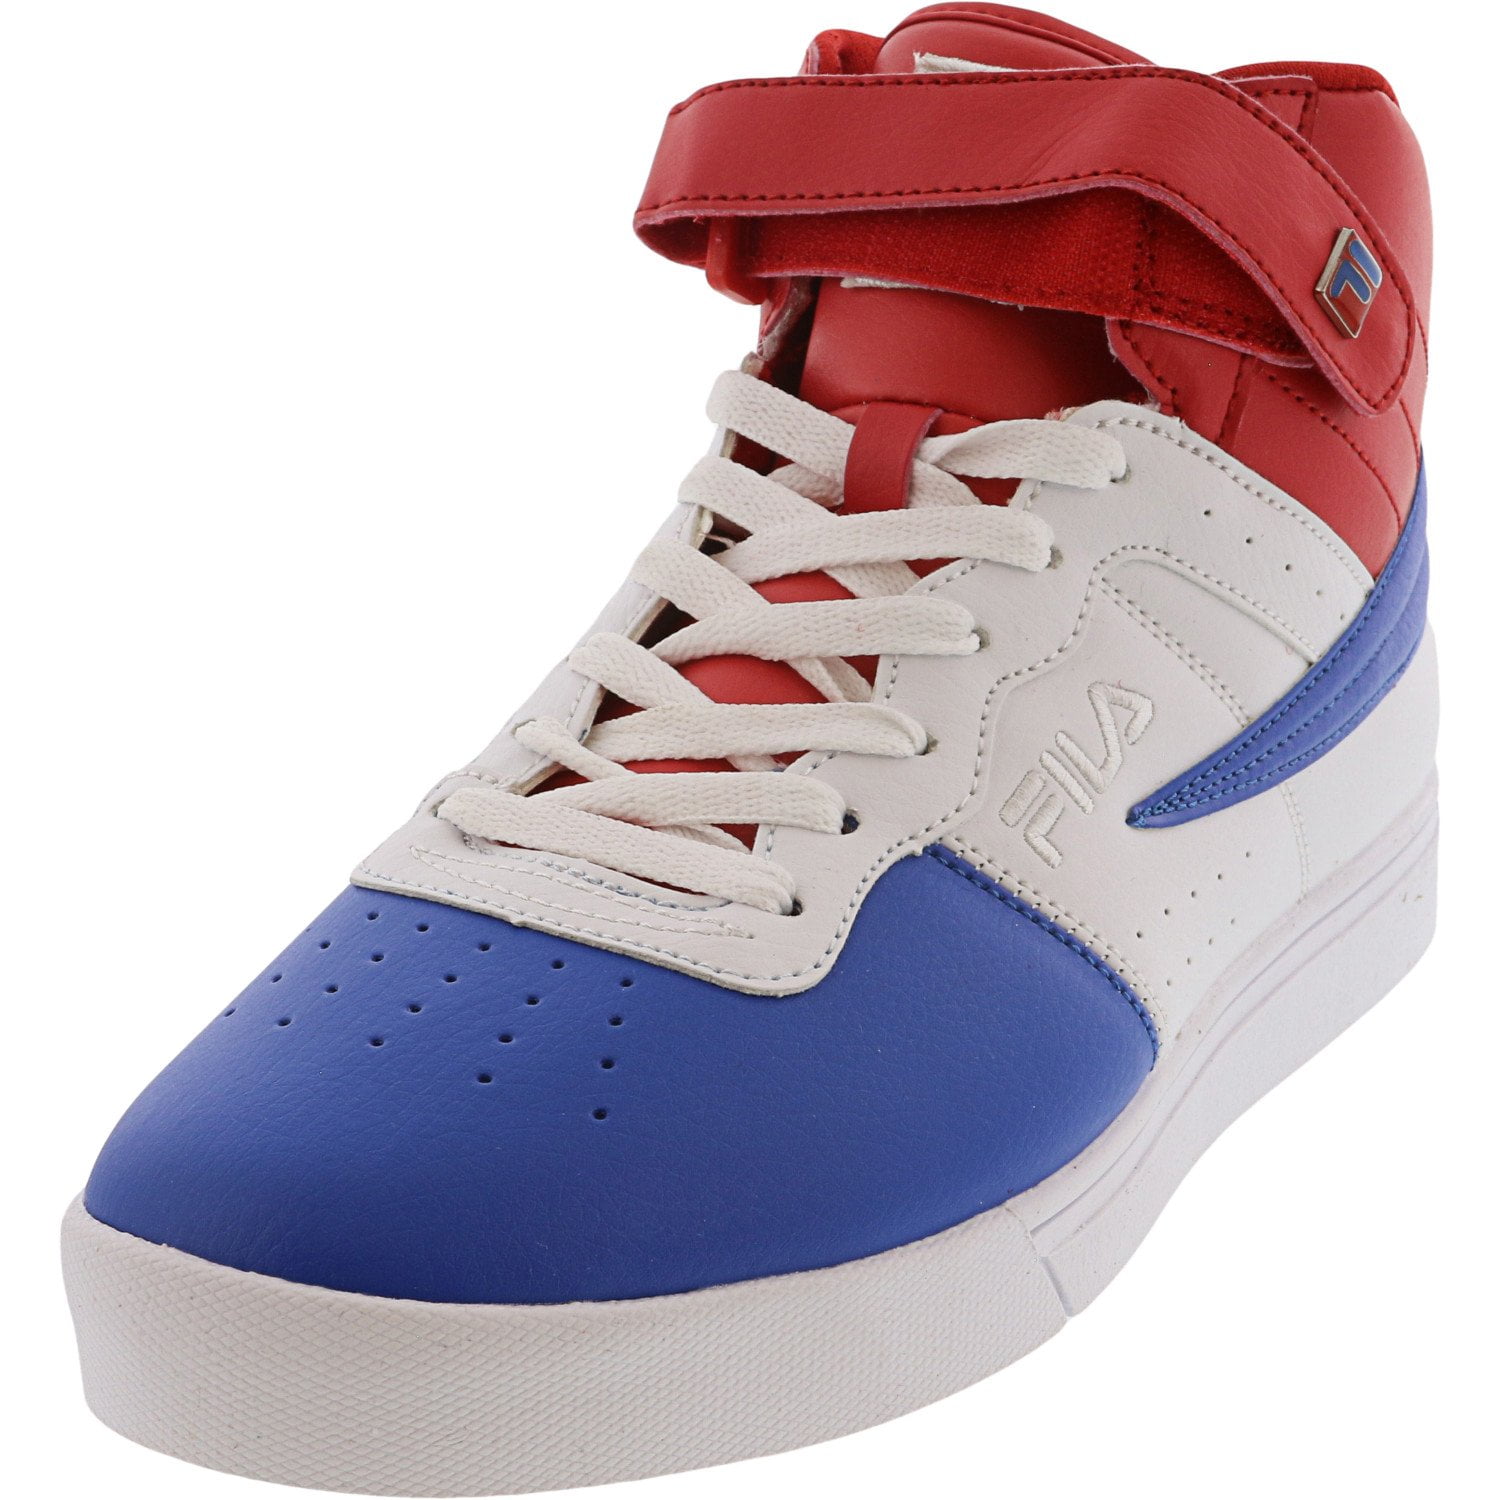 Fila Men's Vulc 13 Mp Bc Blue / White Red High-Top Sneaker - 9M